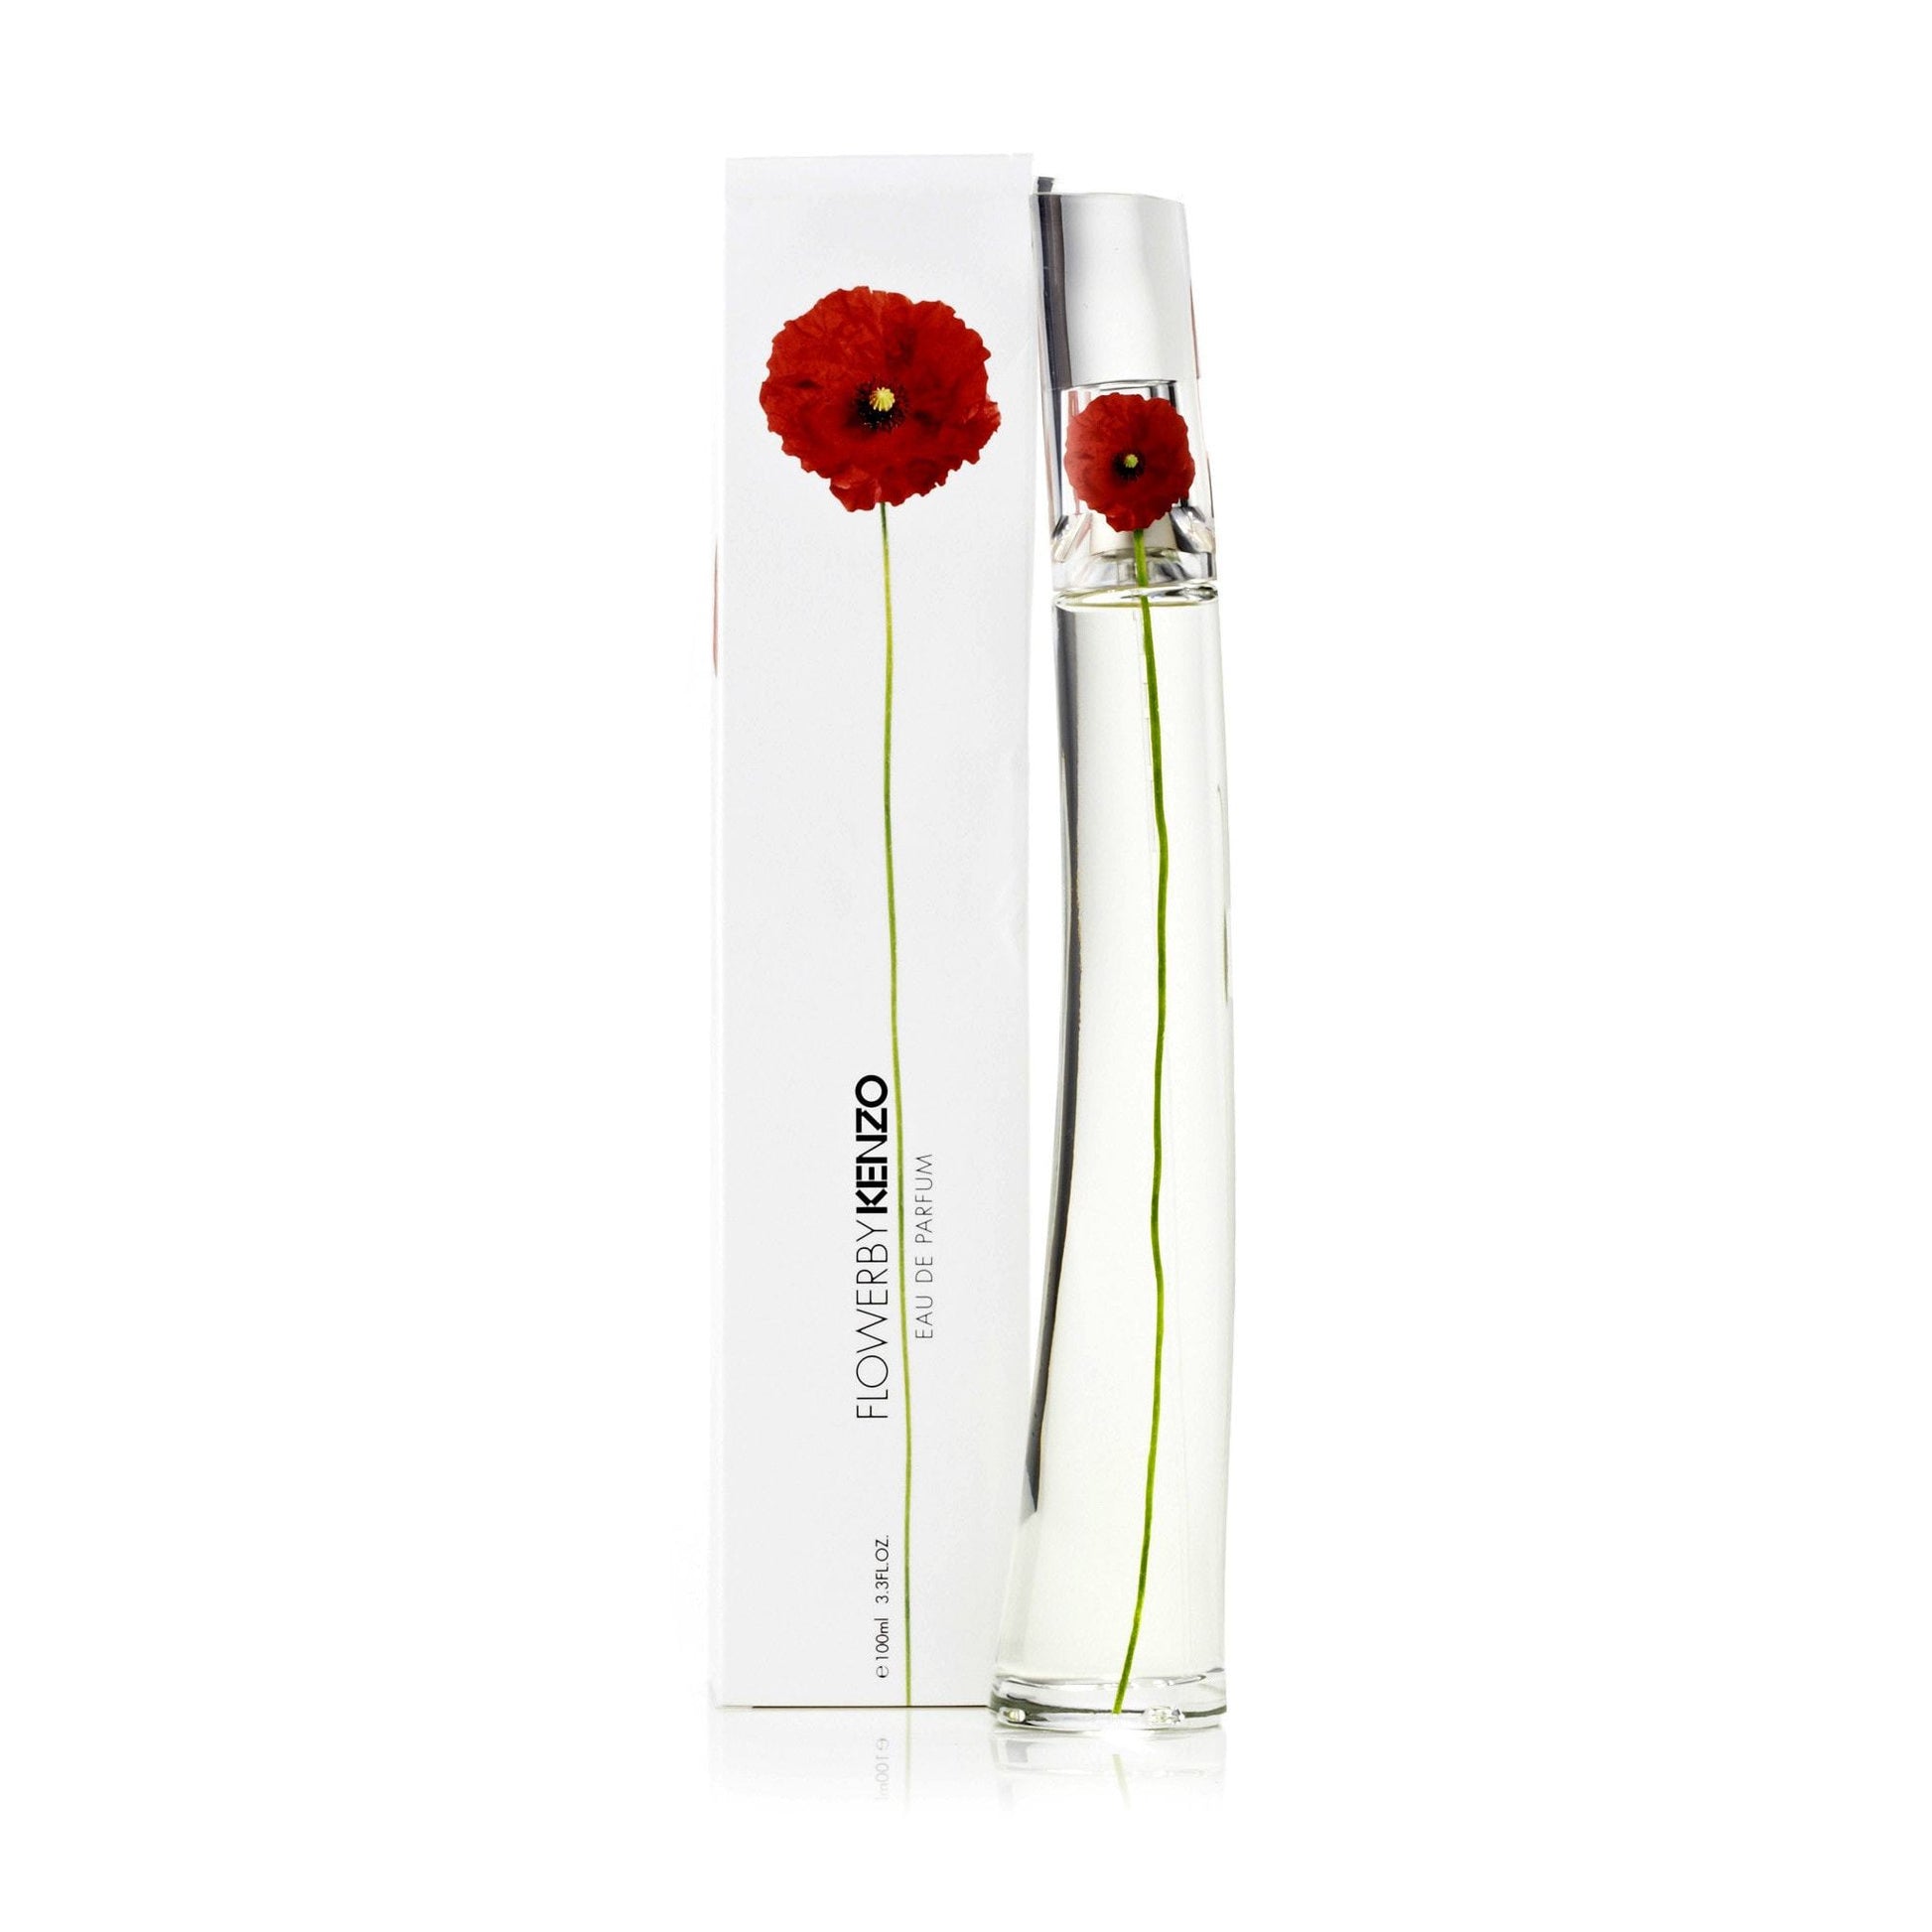 Flower Eau de Parfum Spray for Women by Kenzo, Product image 1